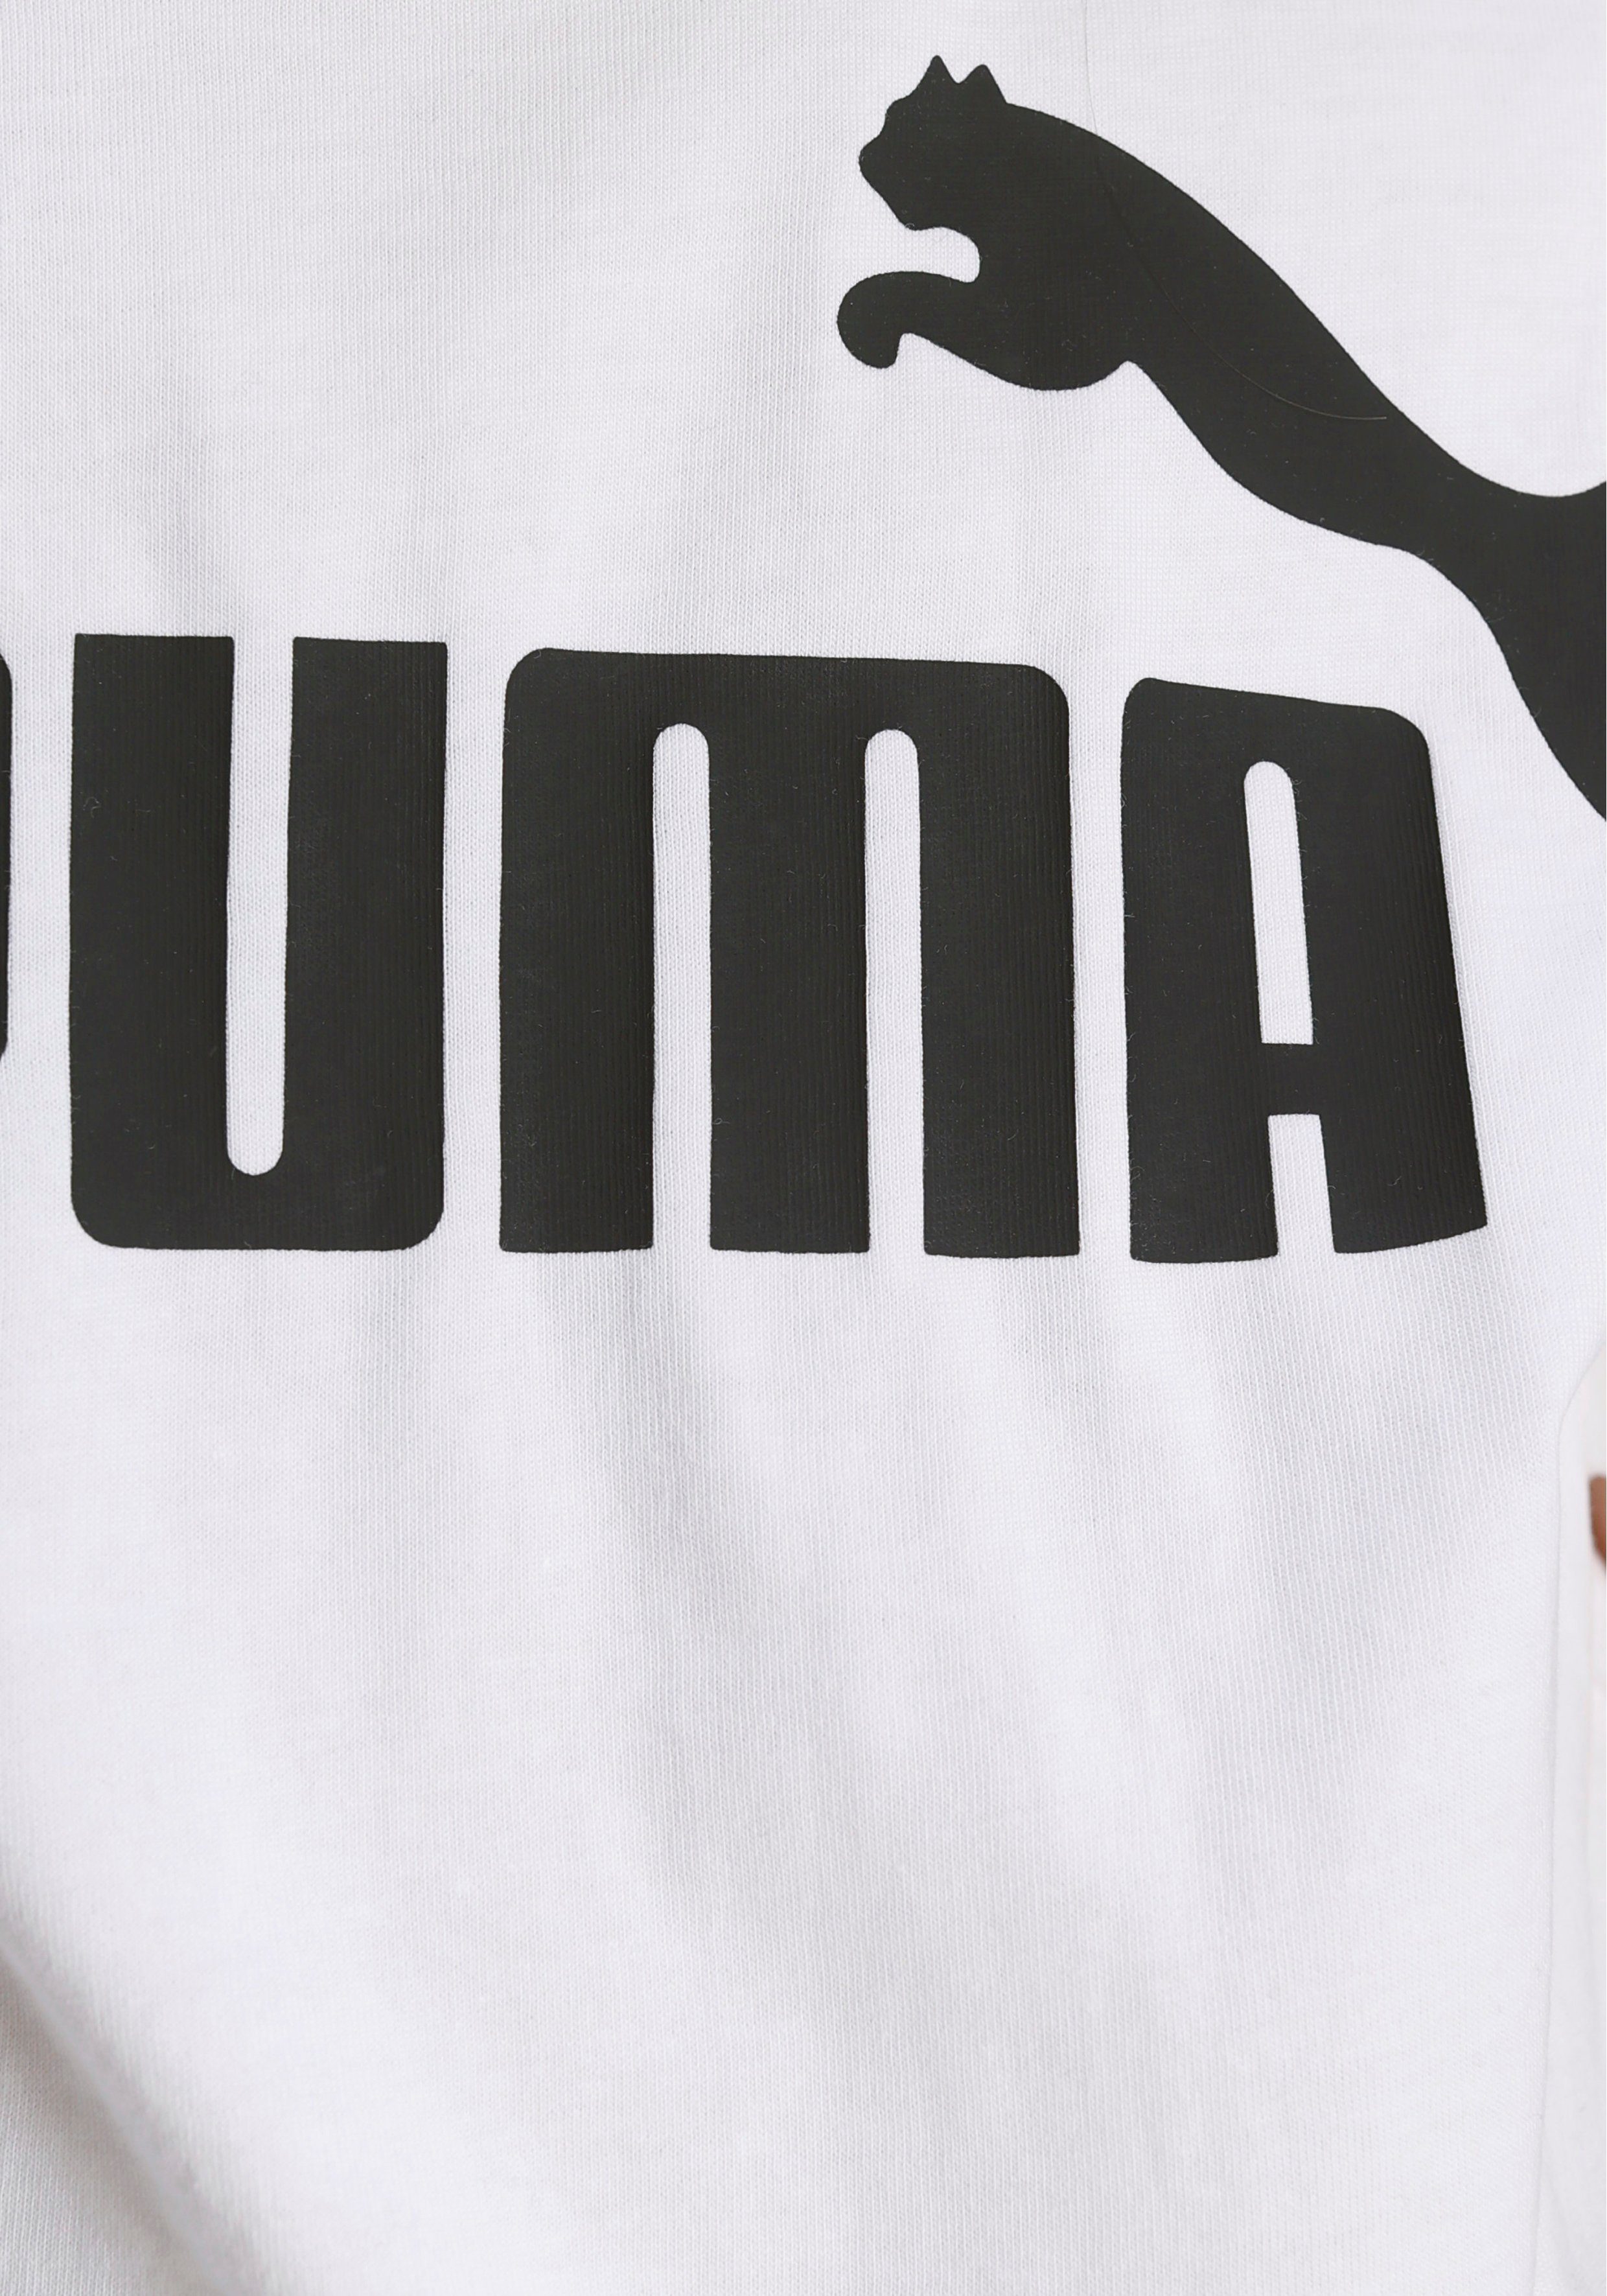 Puma TEE B LOGO ESS PUMA T-Shirt White